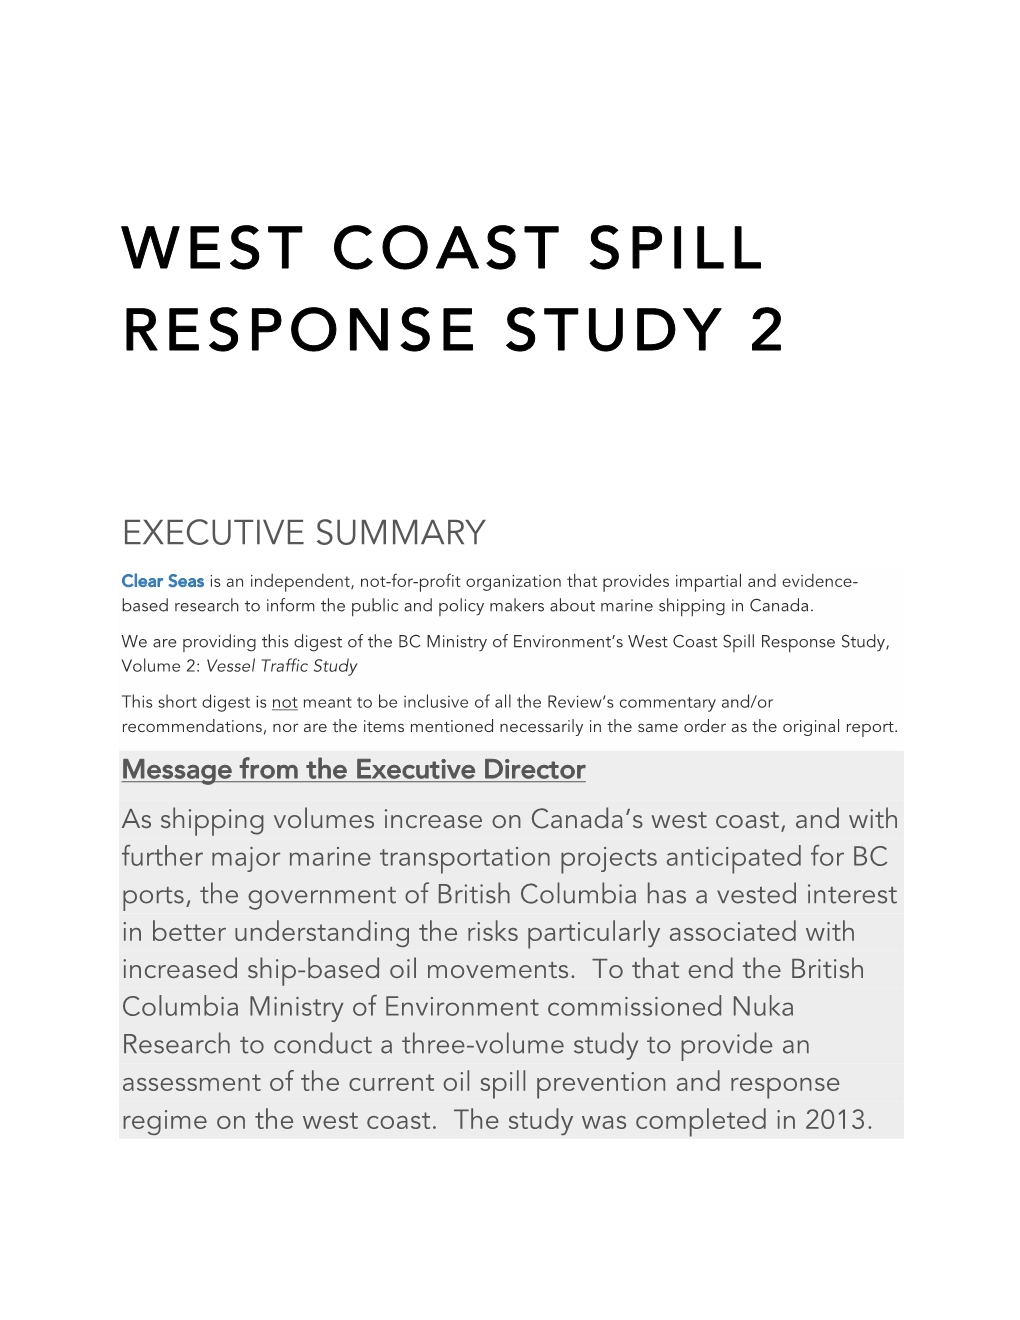 West Coast Spill Response Study 2